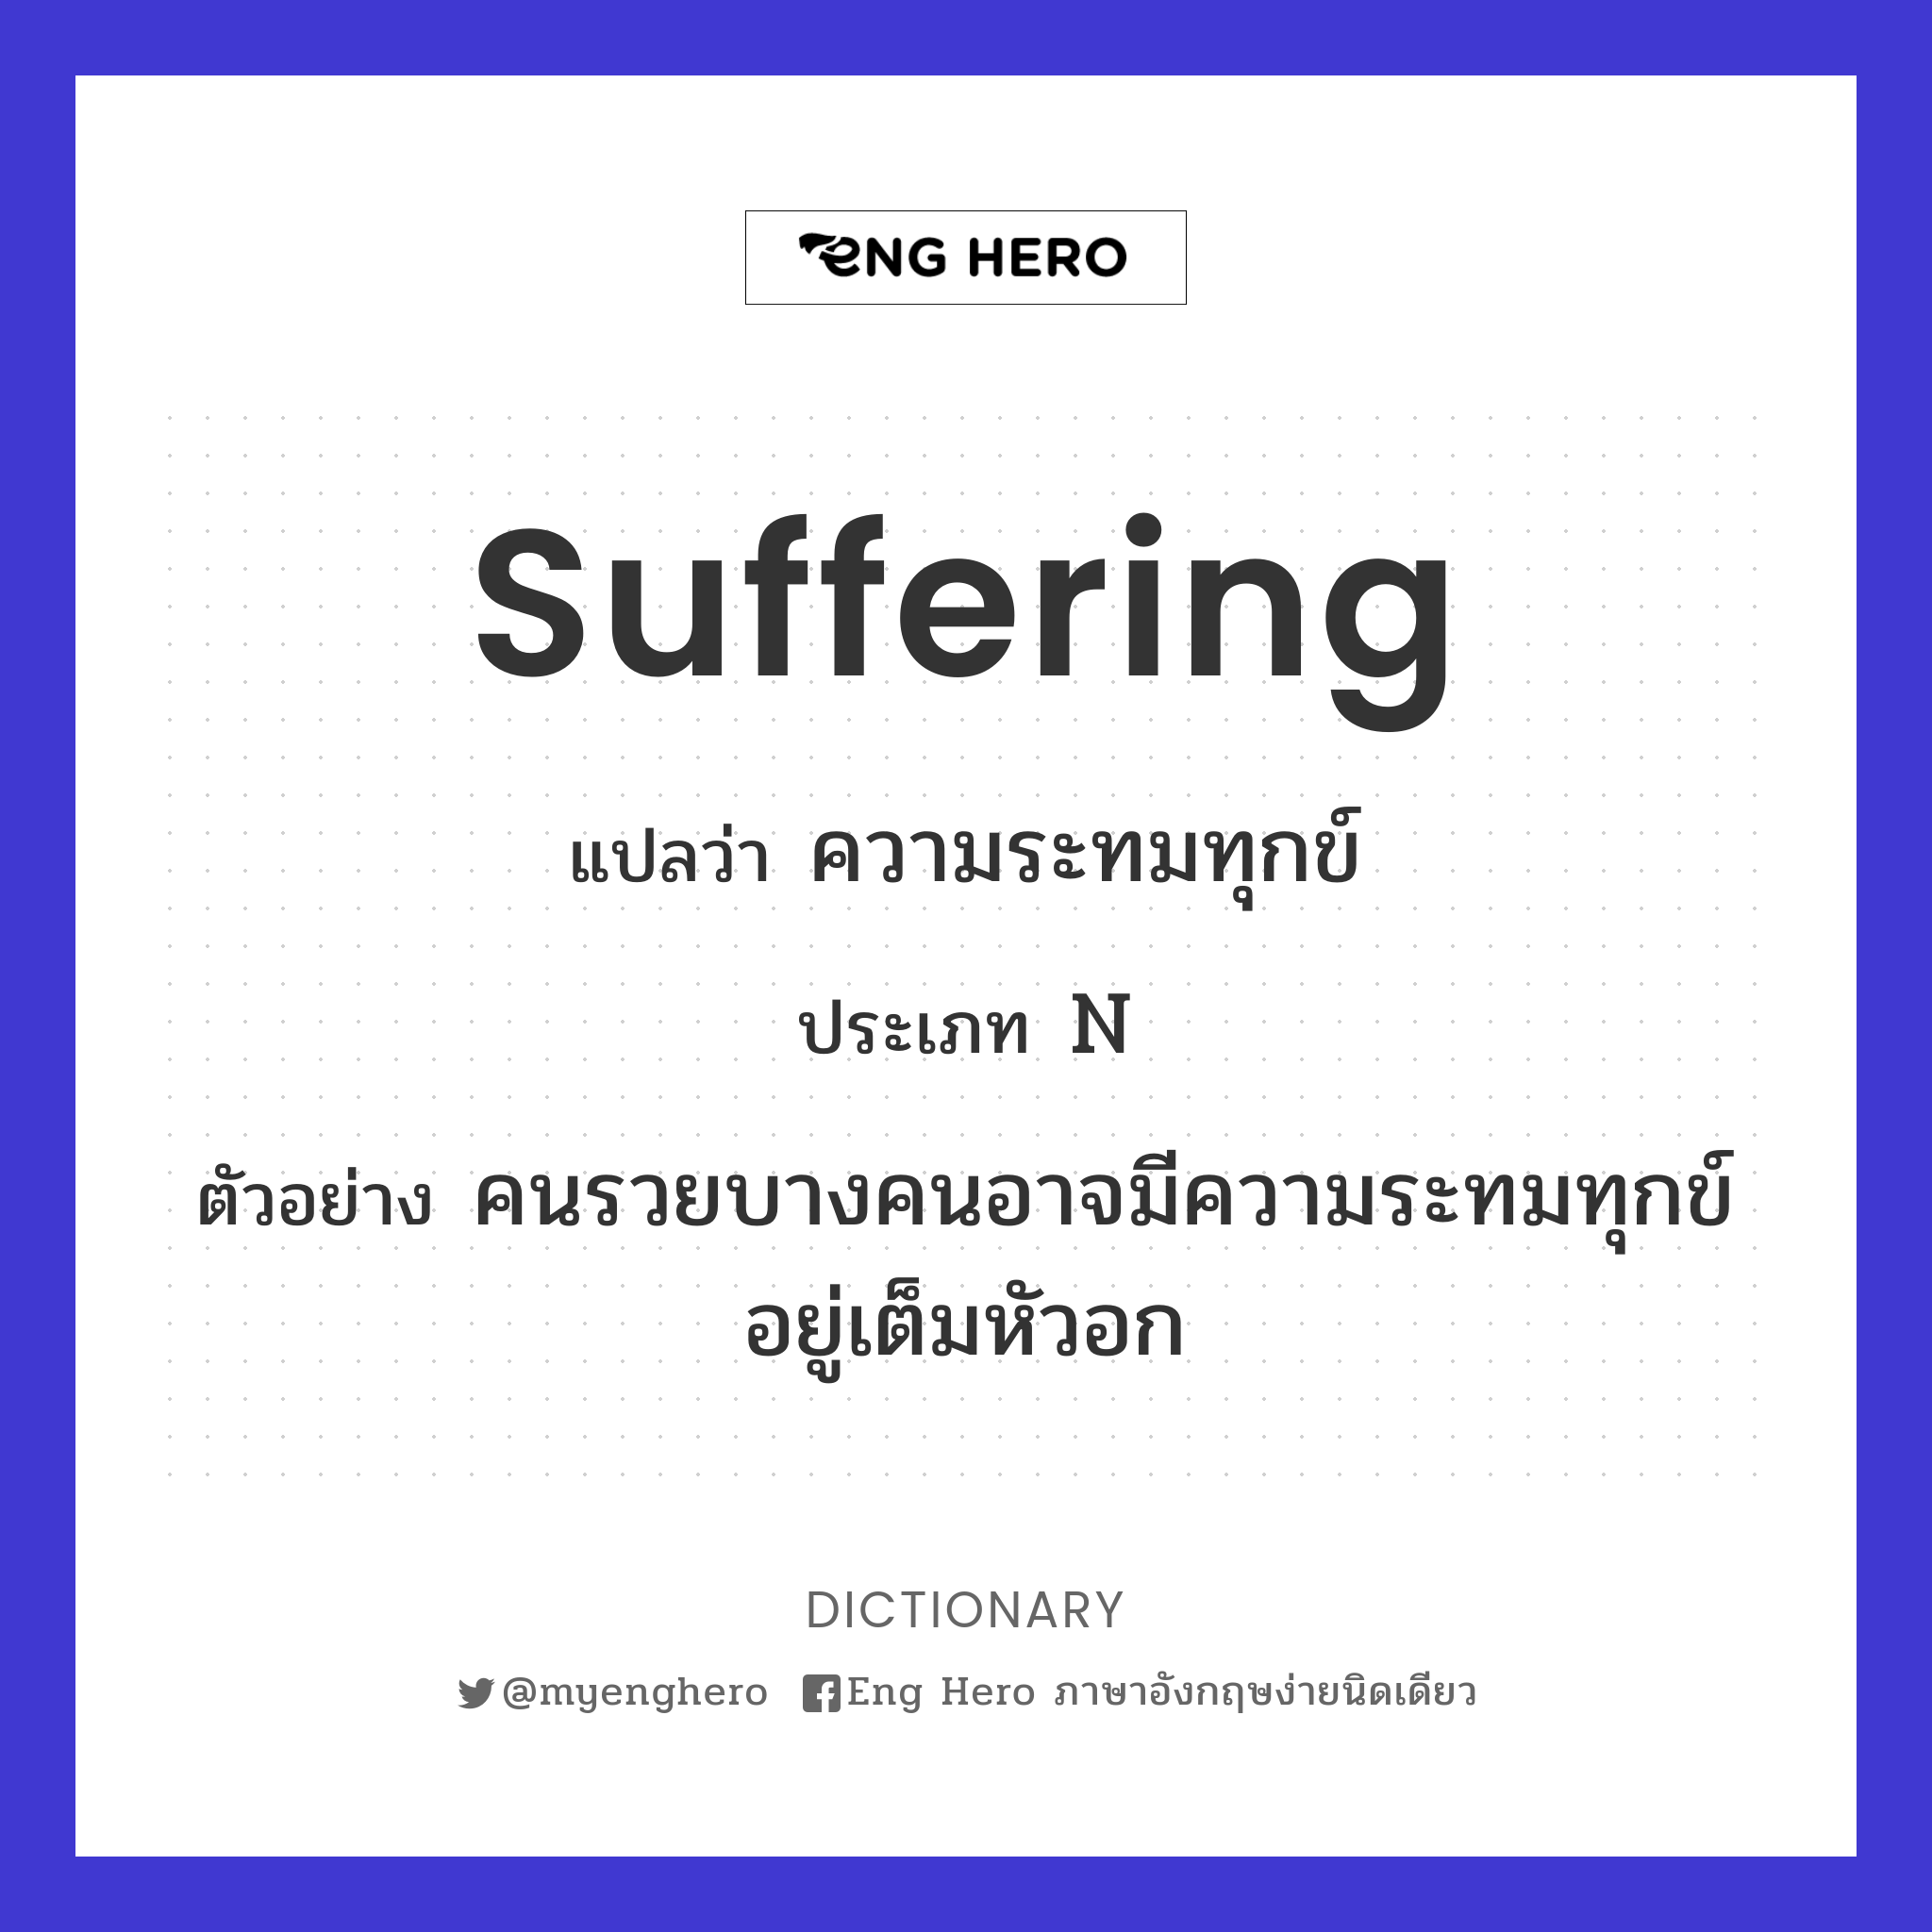 suffering